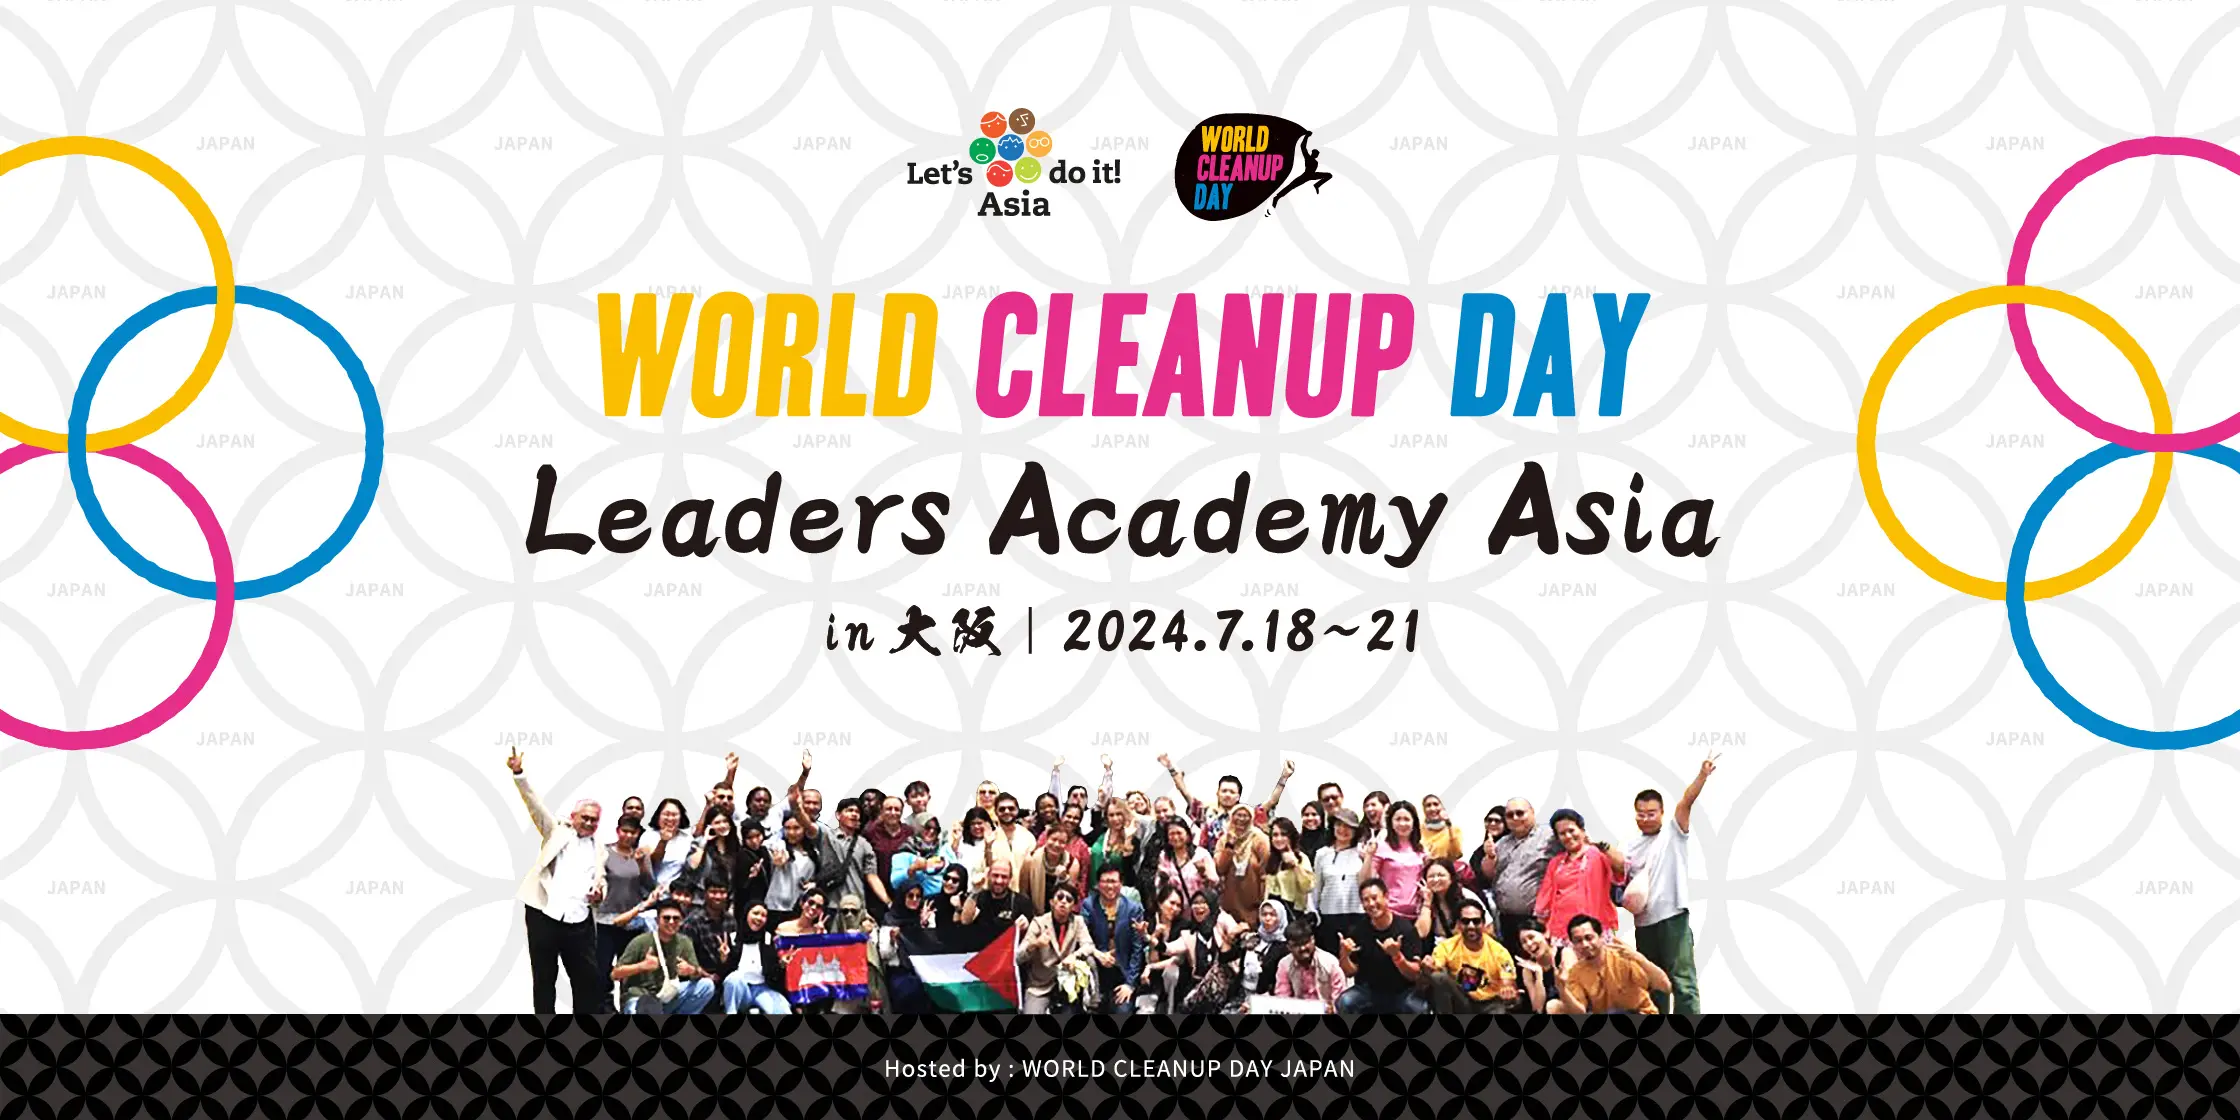 Leaders Academy Asia